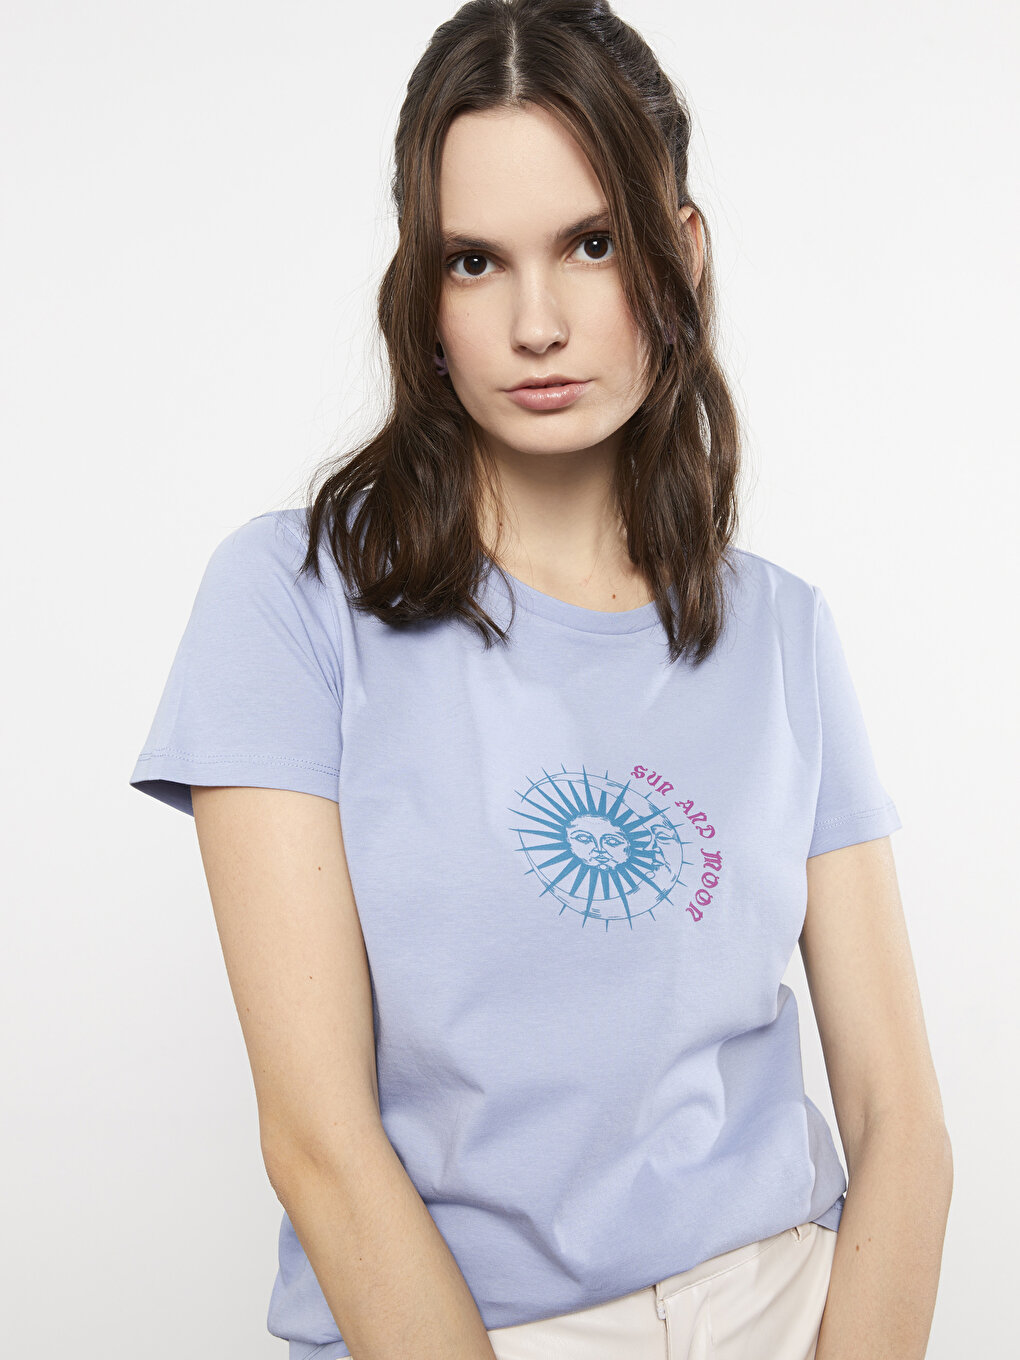 Crew Neck Printed Short Sleeve Cotton Women's T-shirt -S2GF56Z8-GCK ...